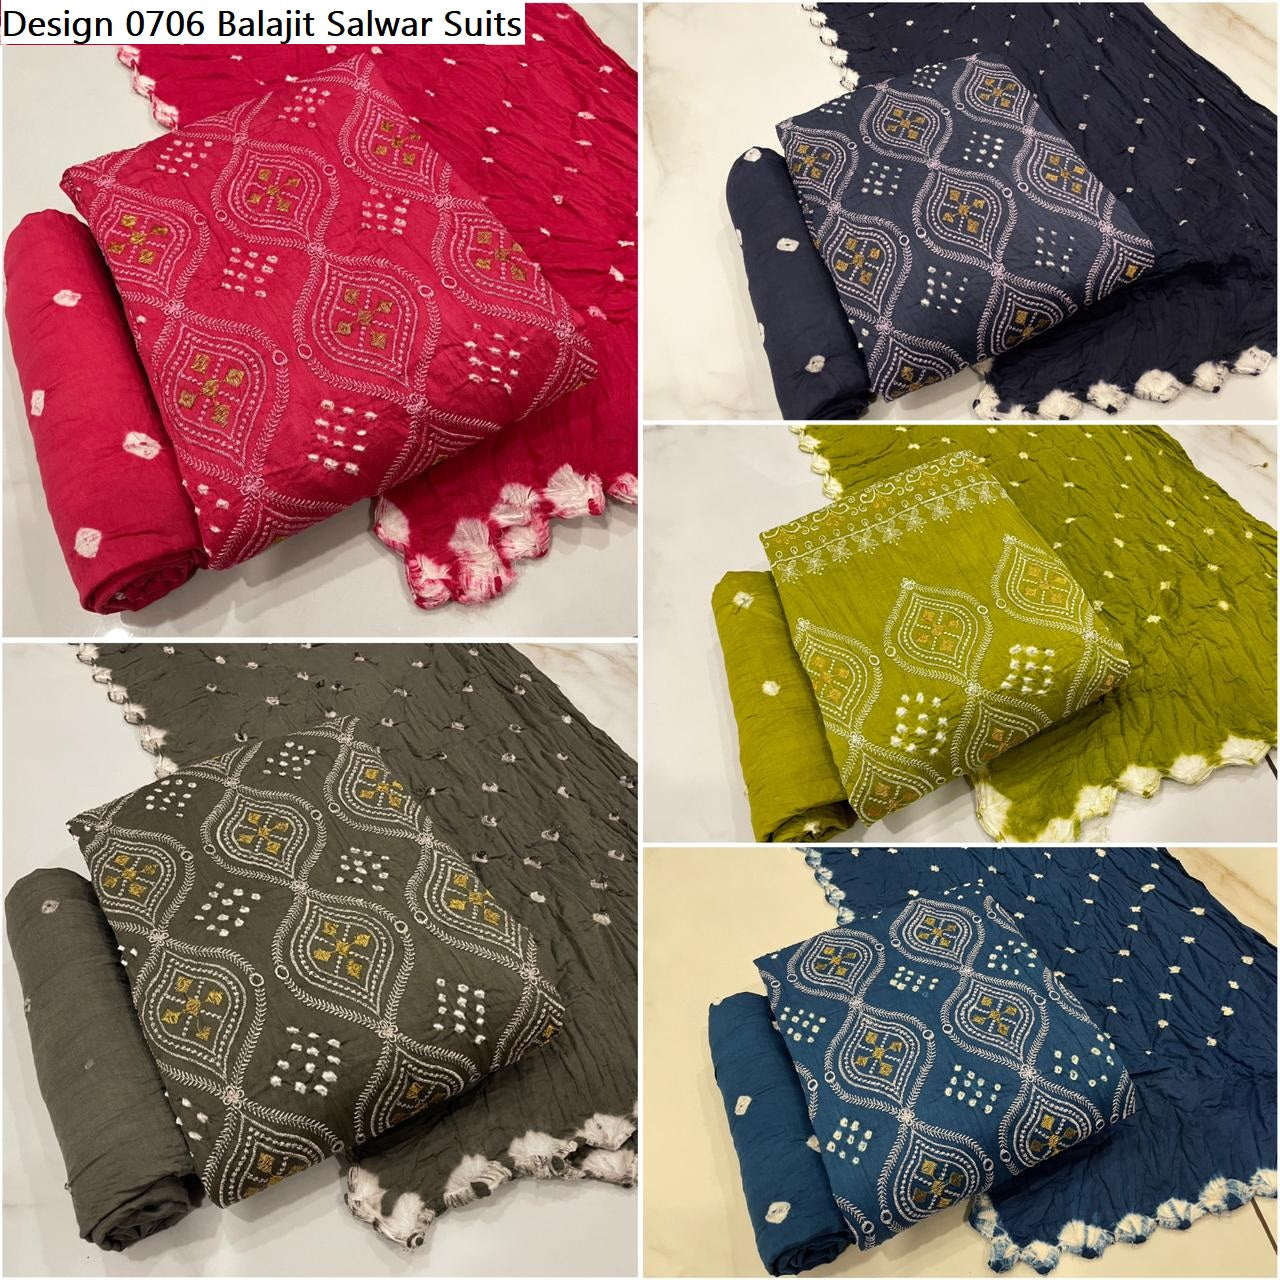 Design 0706 Balajit Cotton Sartin Salwar Suits Supplier